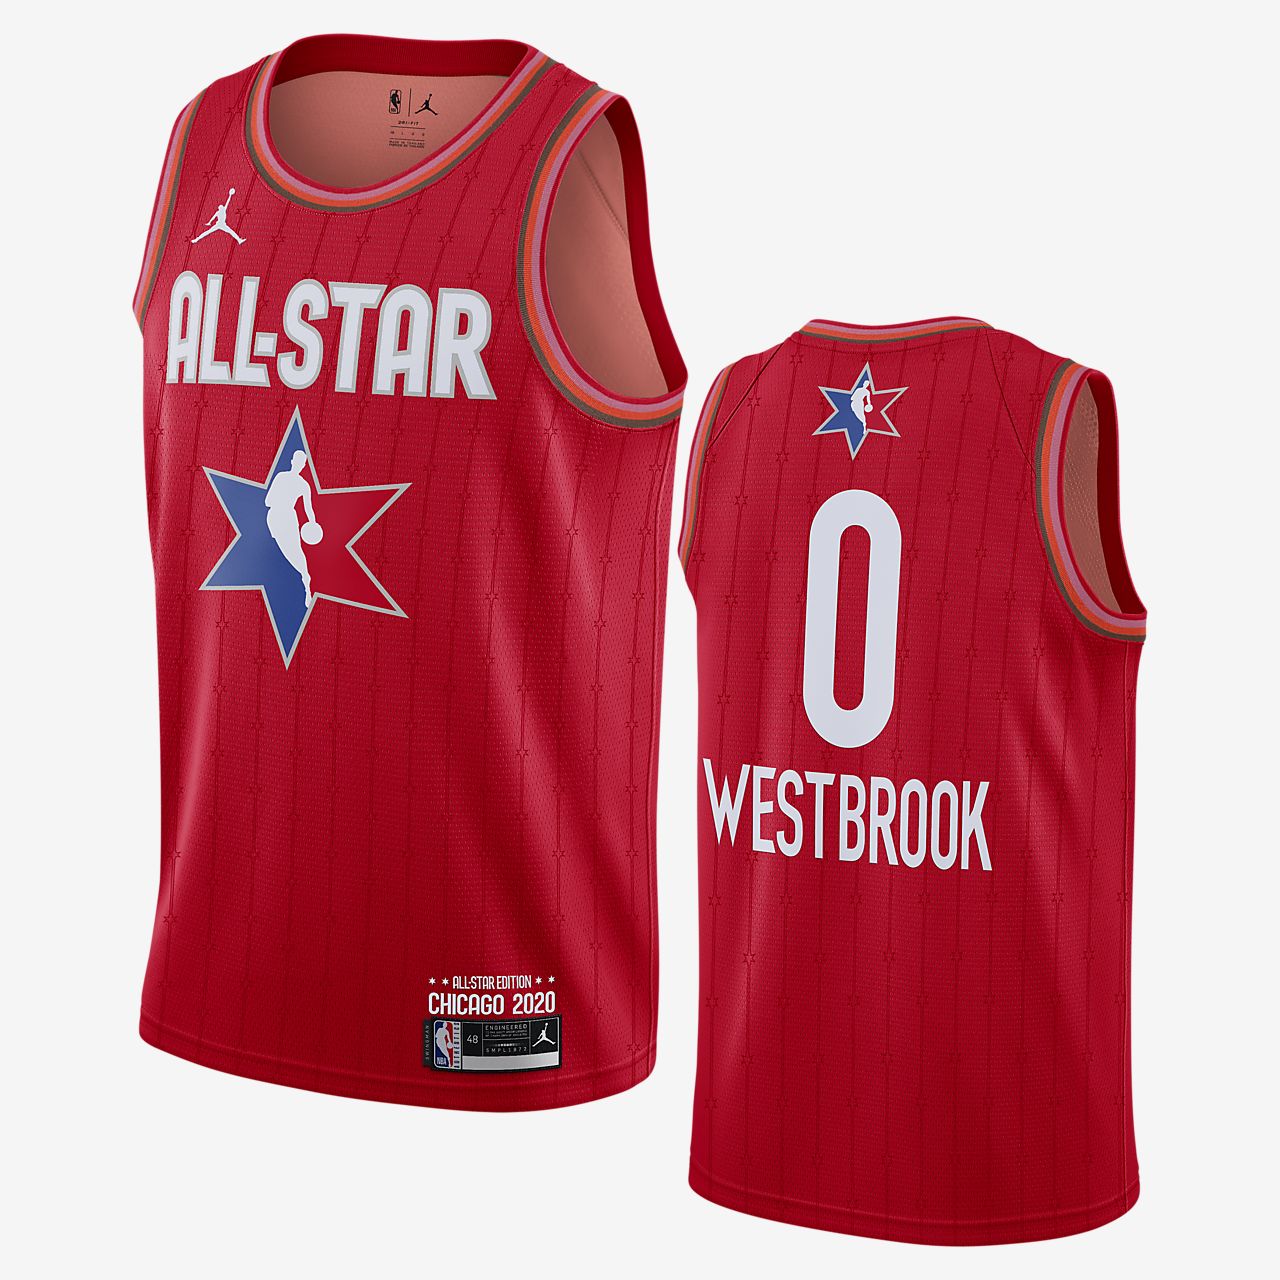 russell westbrook retro jersey